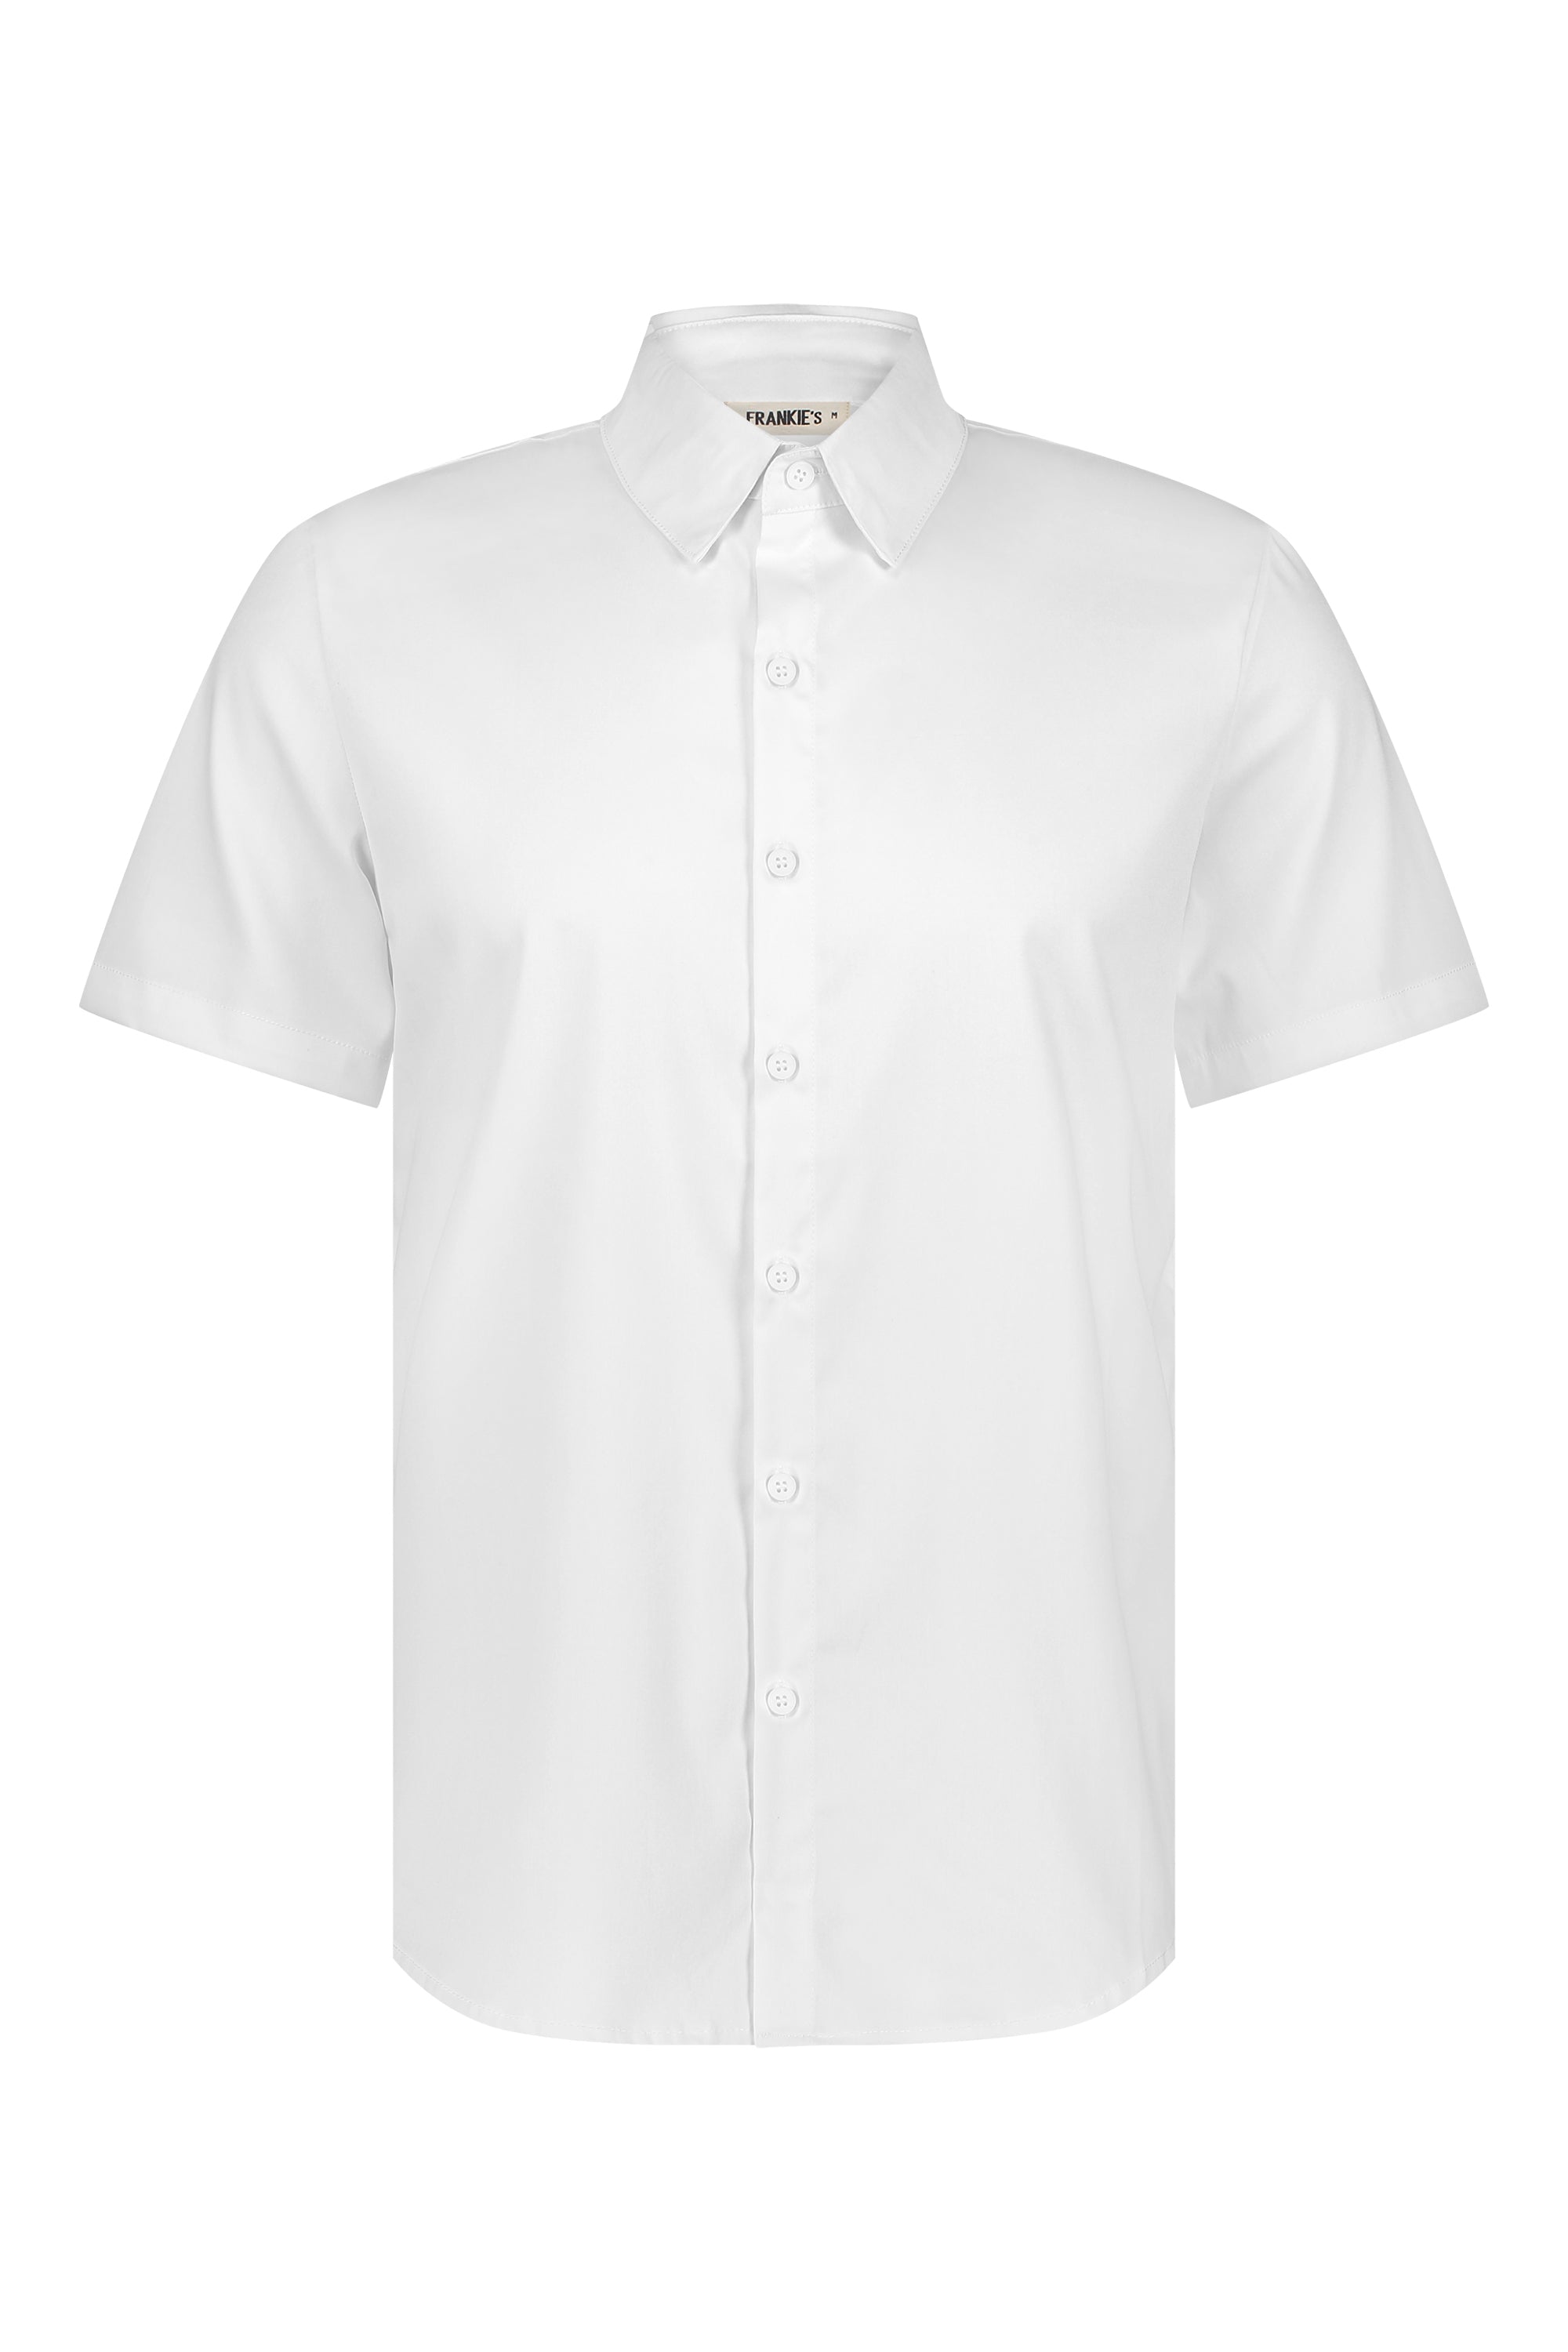 Shirt super stretch short sleeve white